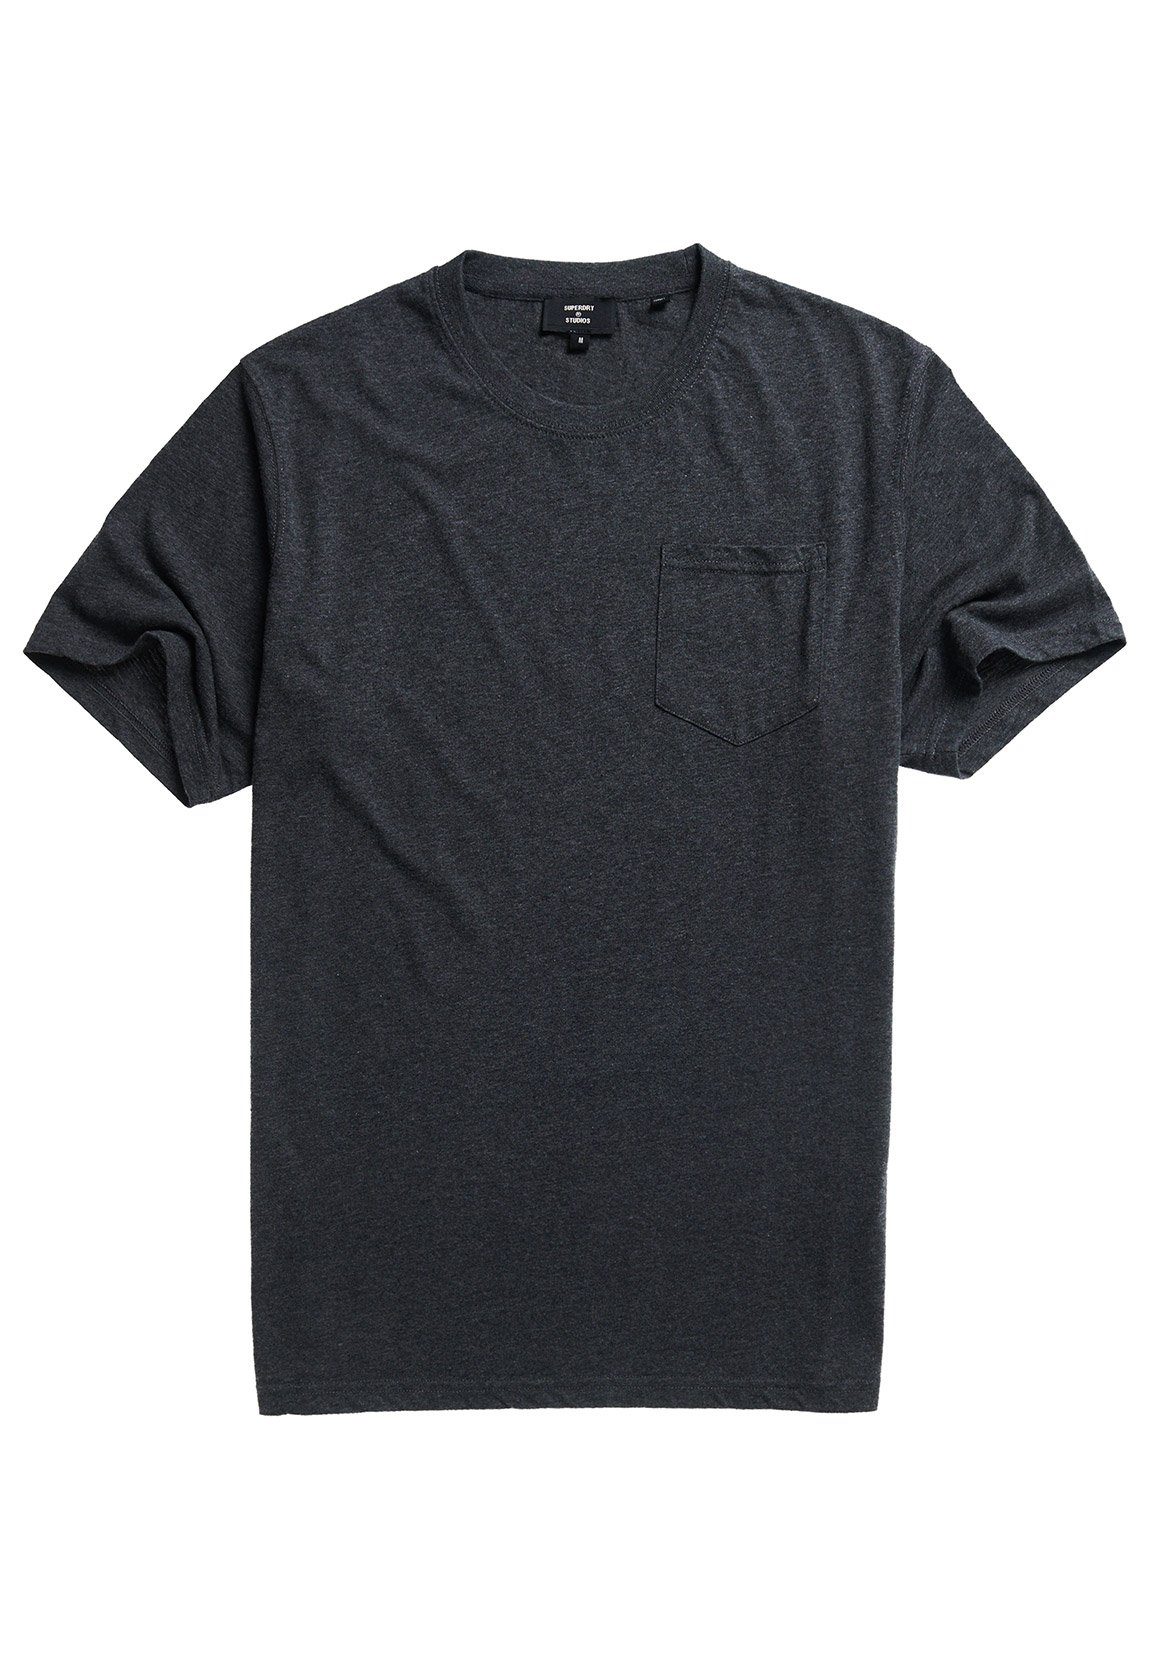 T-Shirt TEE Marl AUTHENTIC T-Shirt Dunkelgrau Superdry Herren Charcoal Superdry COTTON